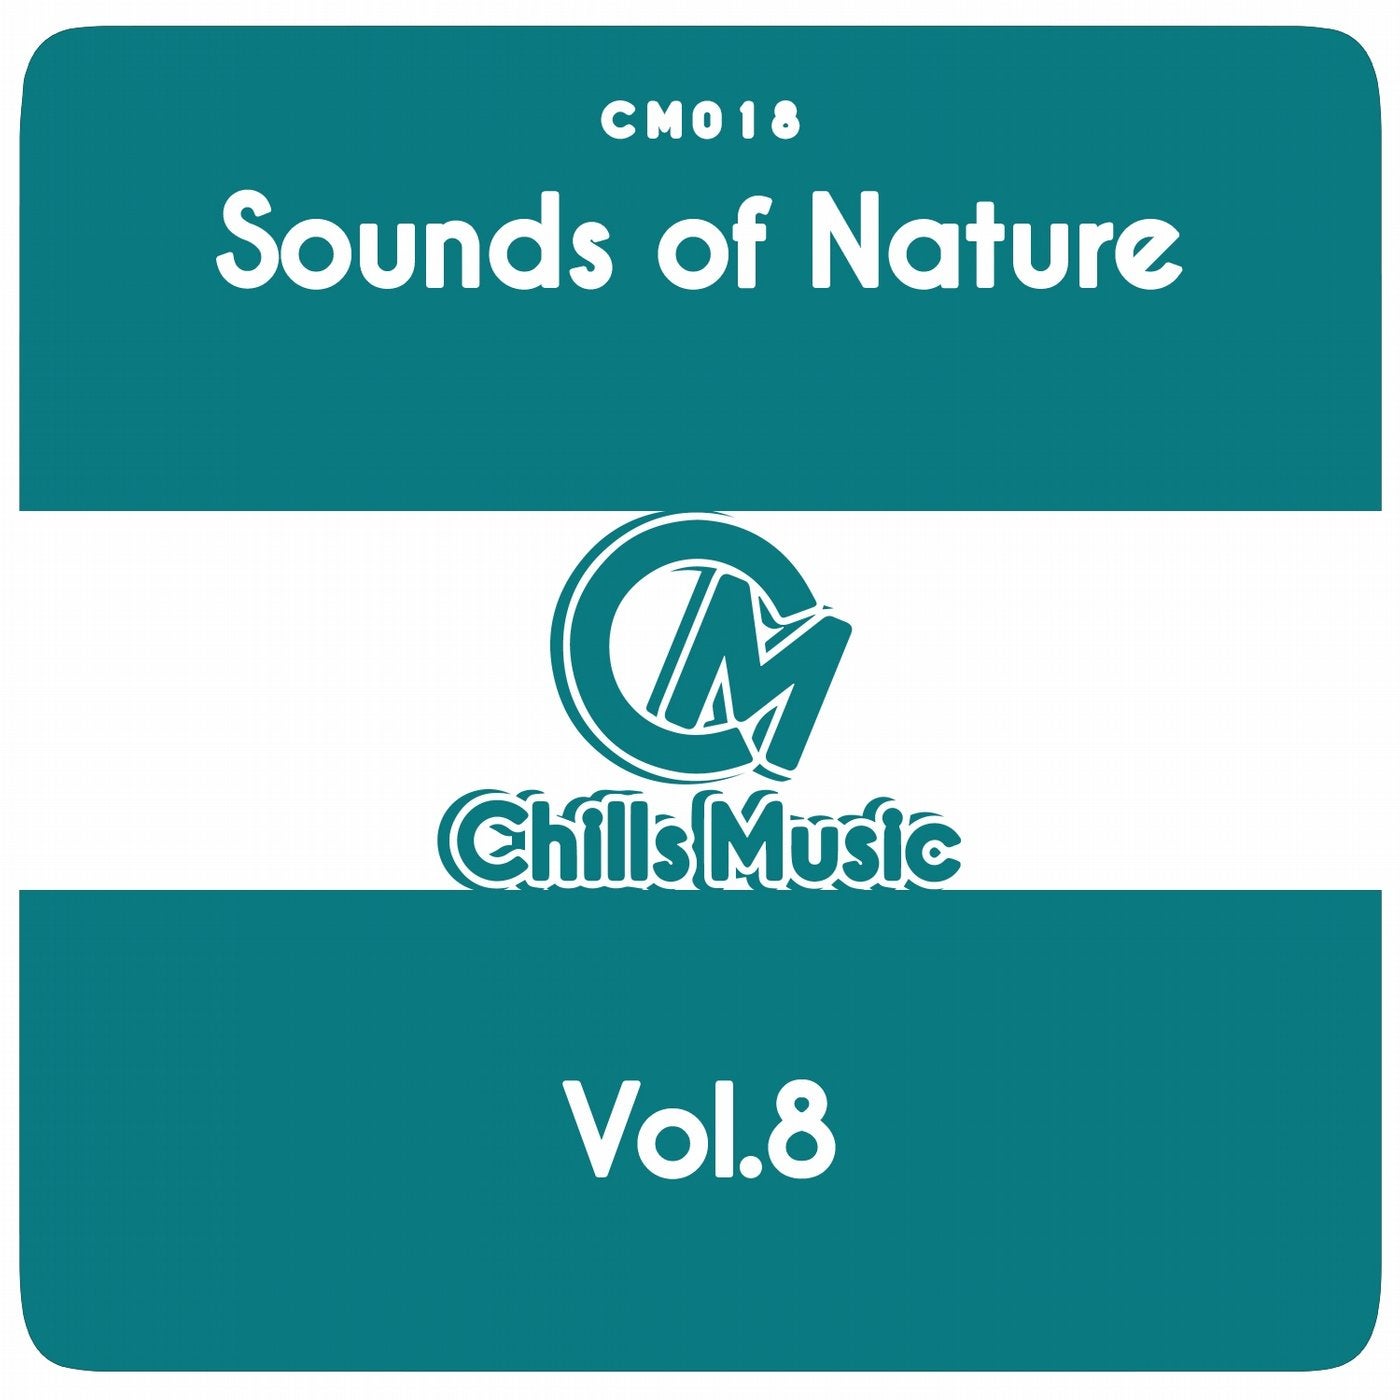 Sounds of Nature Vol.8